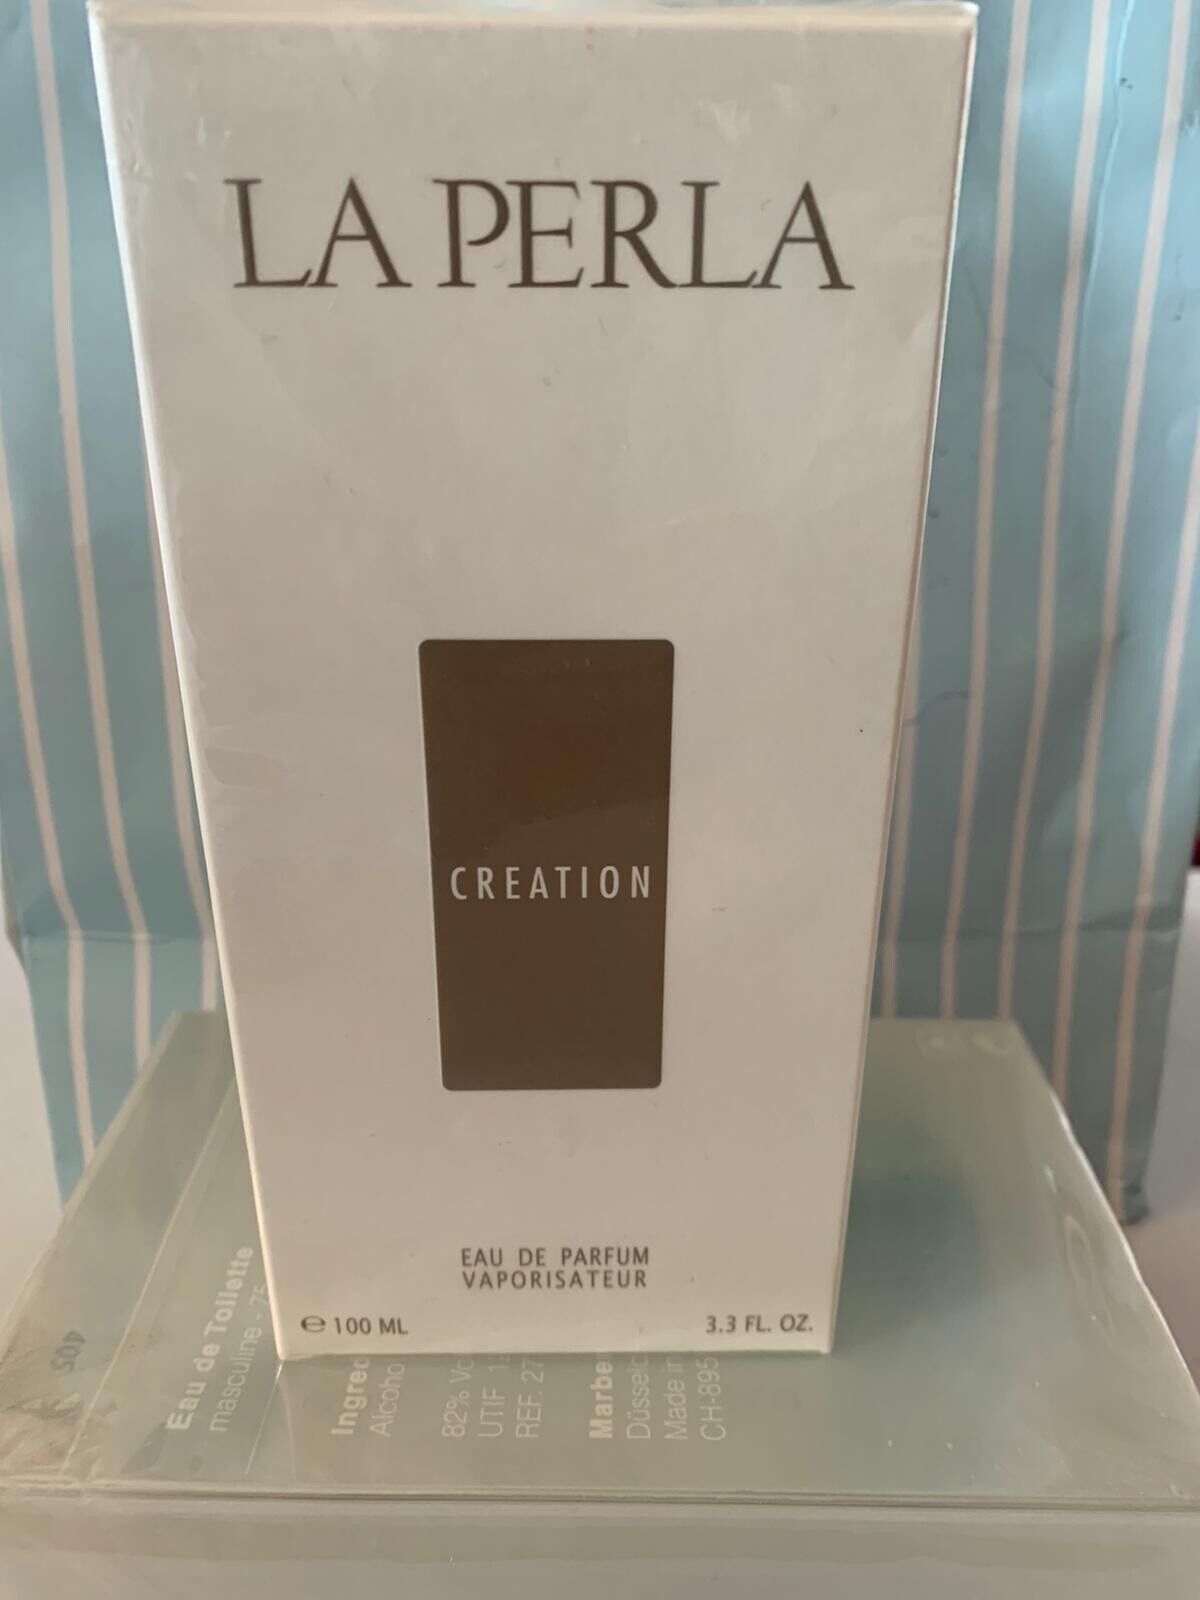 La Perla CREATION Perfume 3.4 Oz Eau de Parfum Spray Vintage Scent Original